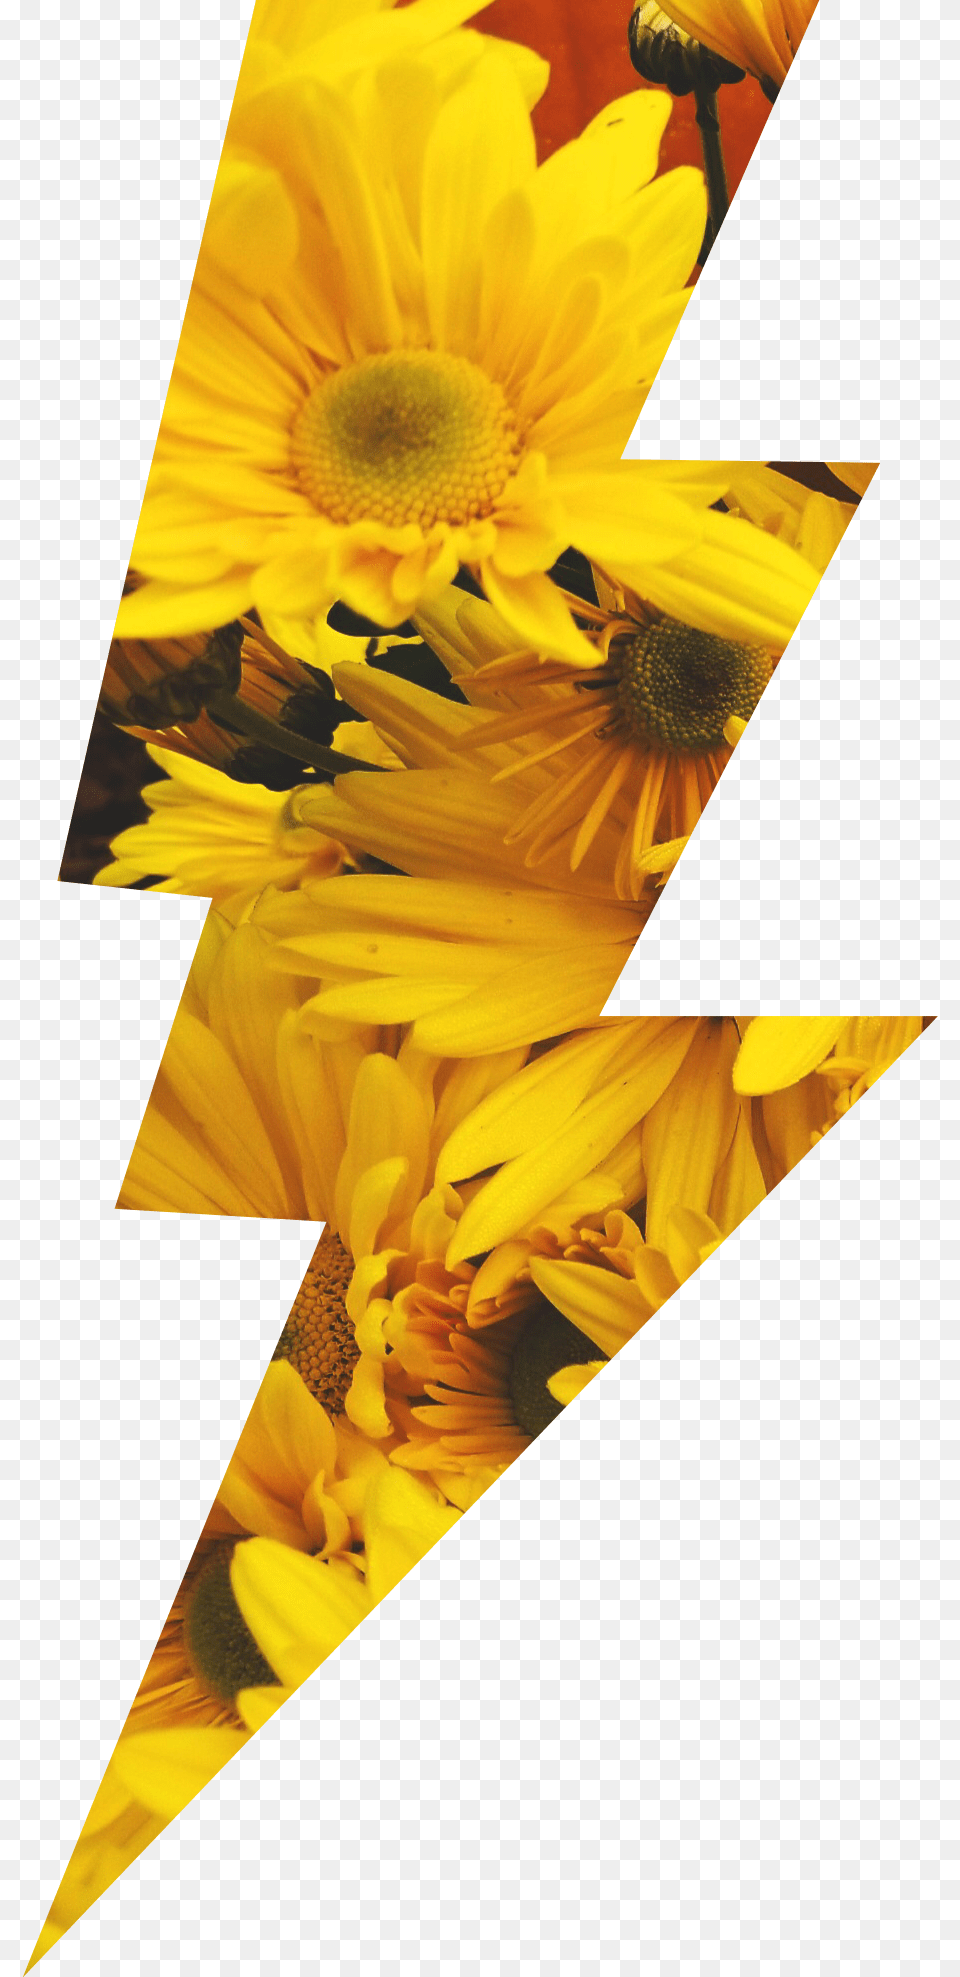 Sunflowers Lightningbolt Lightning Yellow Flowers Lightning Bolt Flower, Petal, Plant, Sunflower, Daisy Png Image